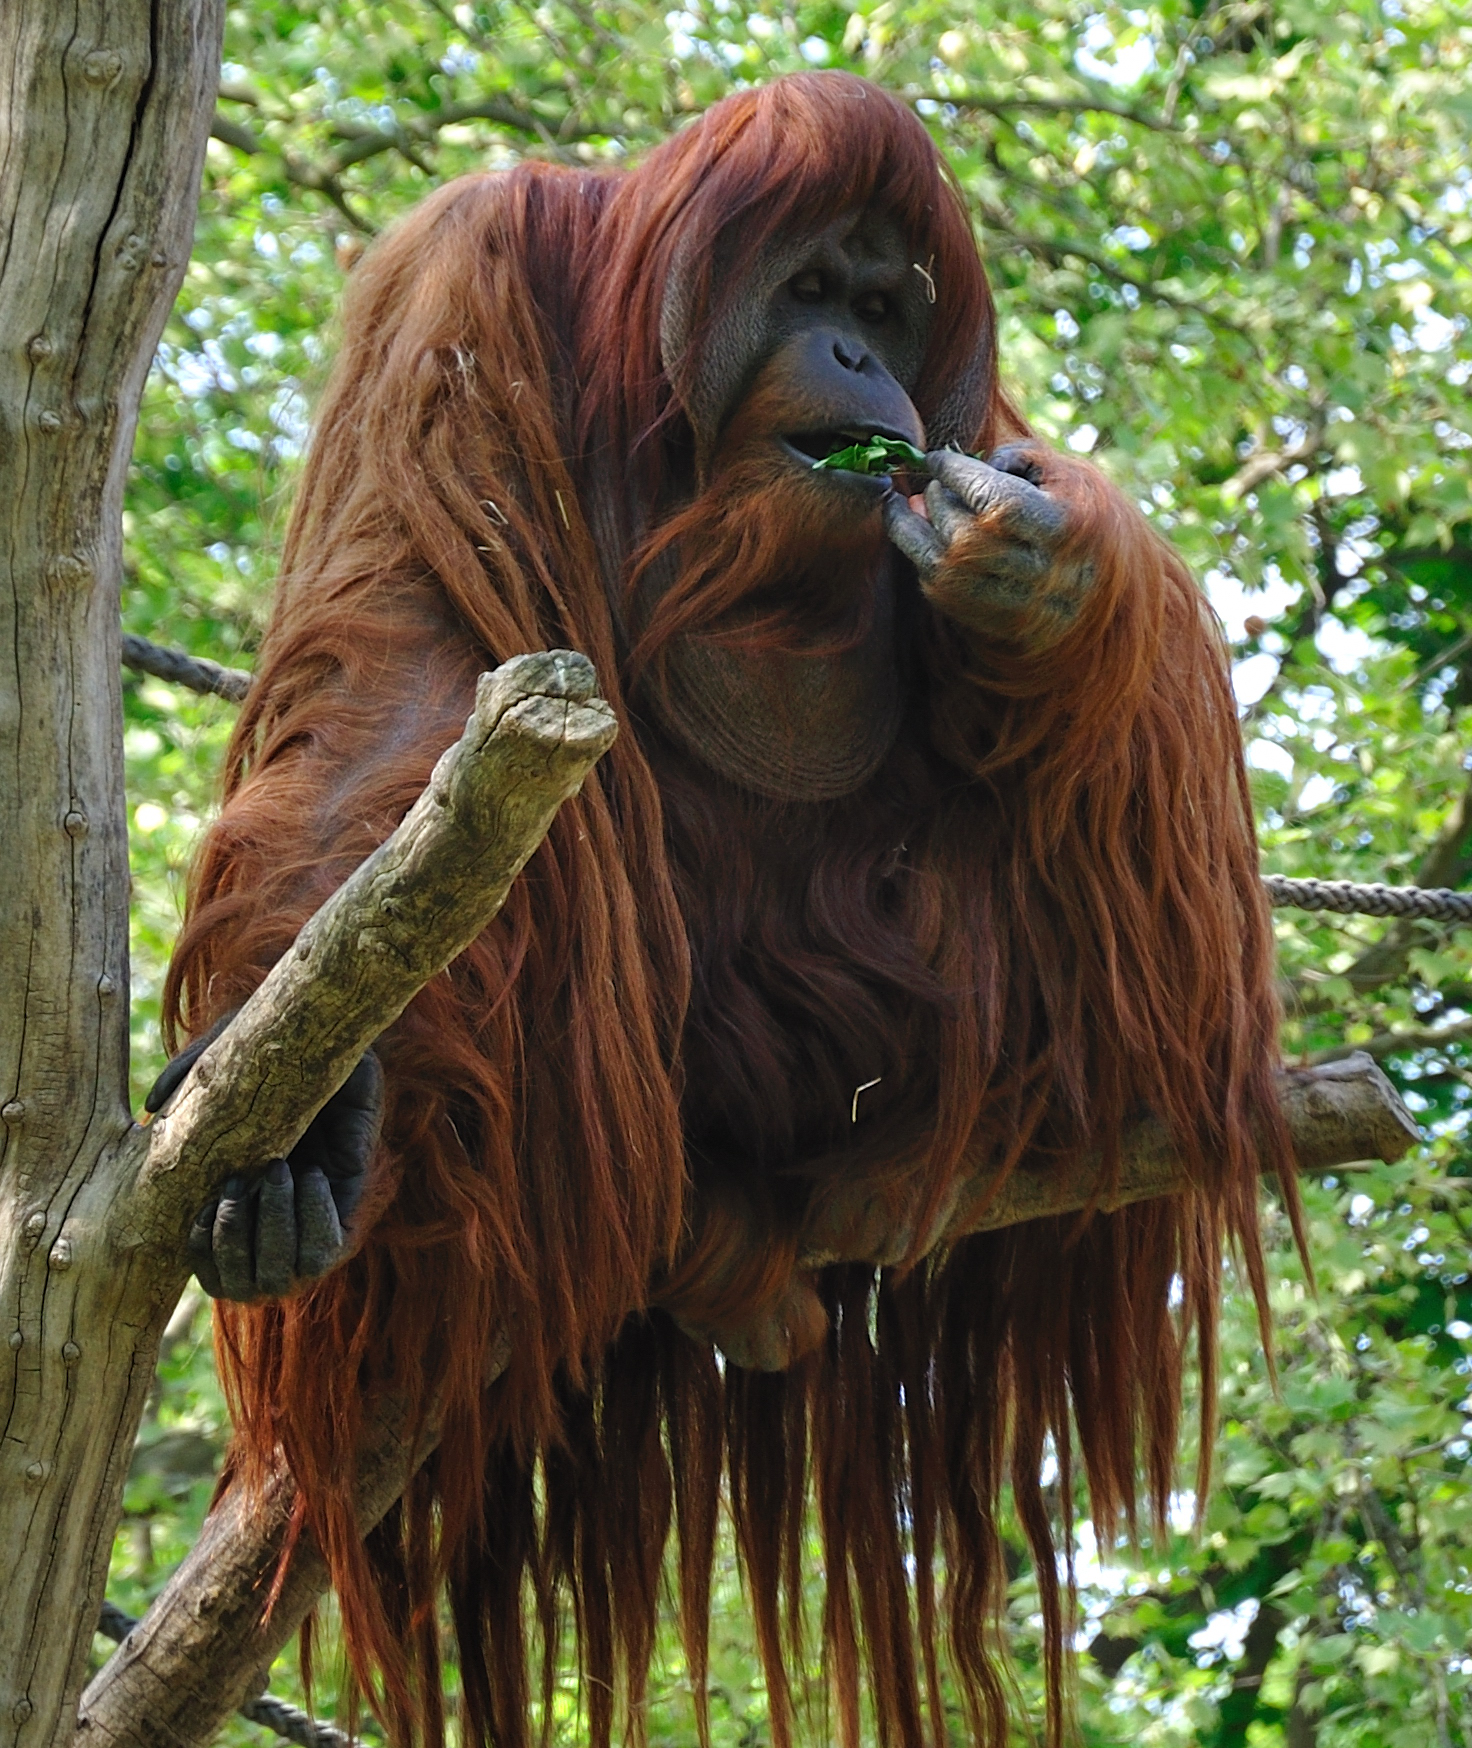 Gigantopithecus is closely allied with orangutans (a male Bornean orangutan above)